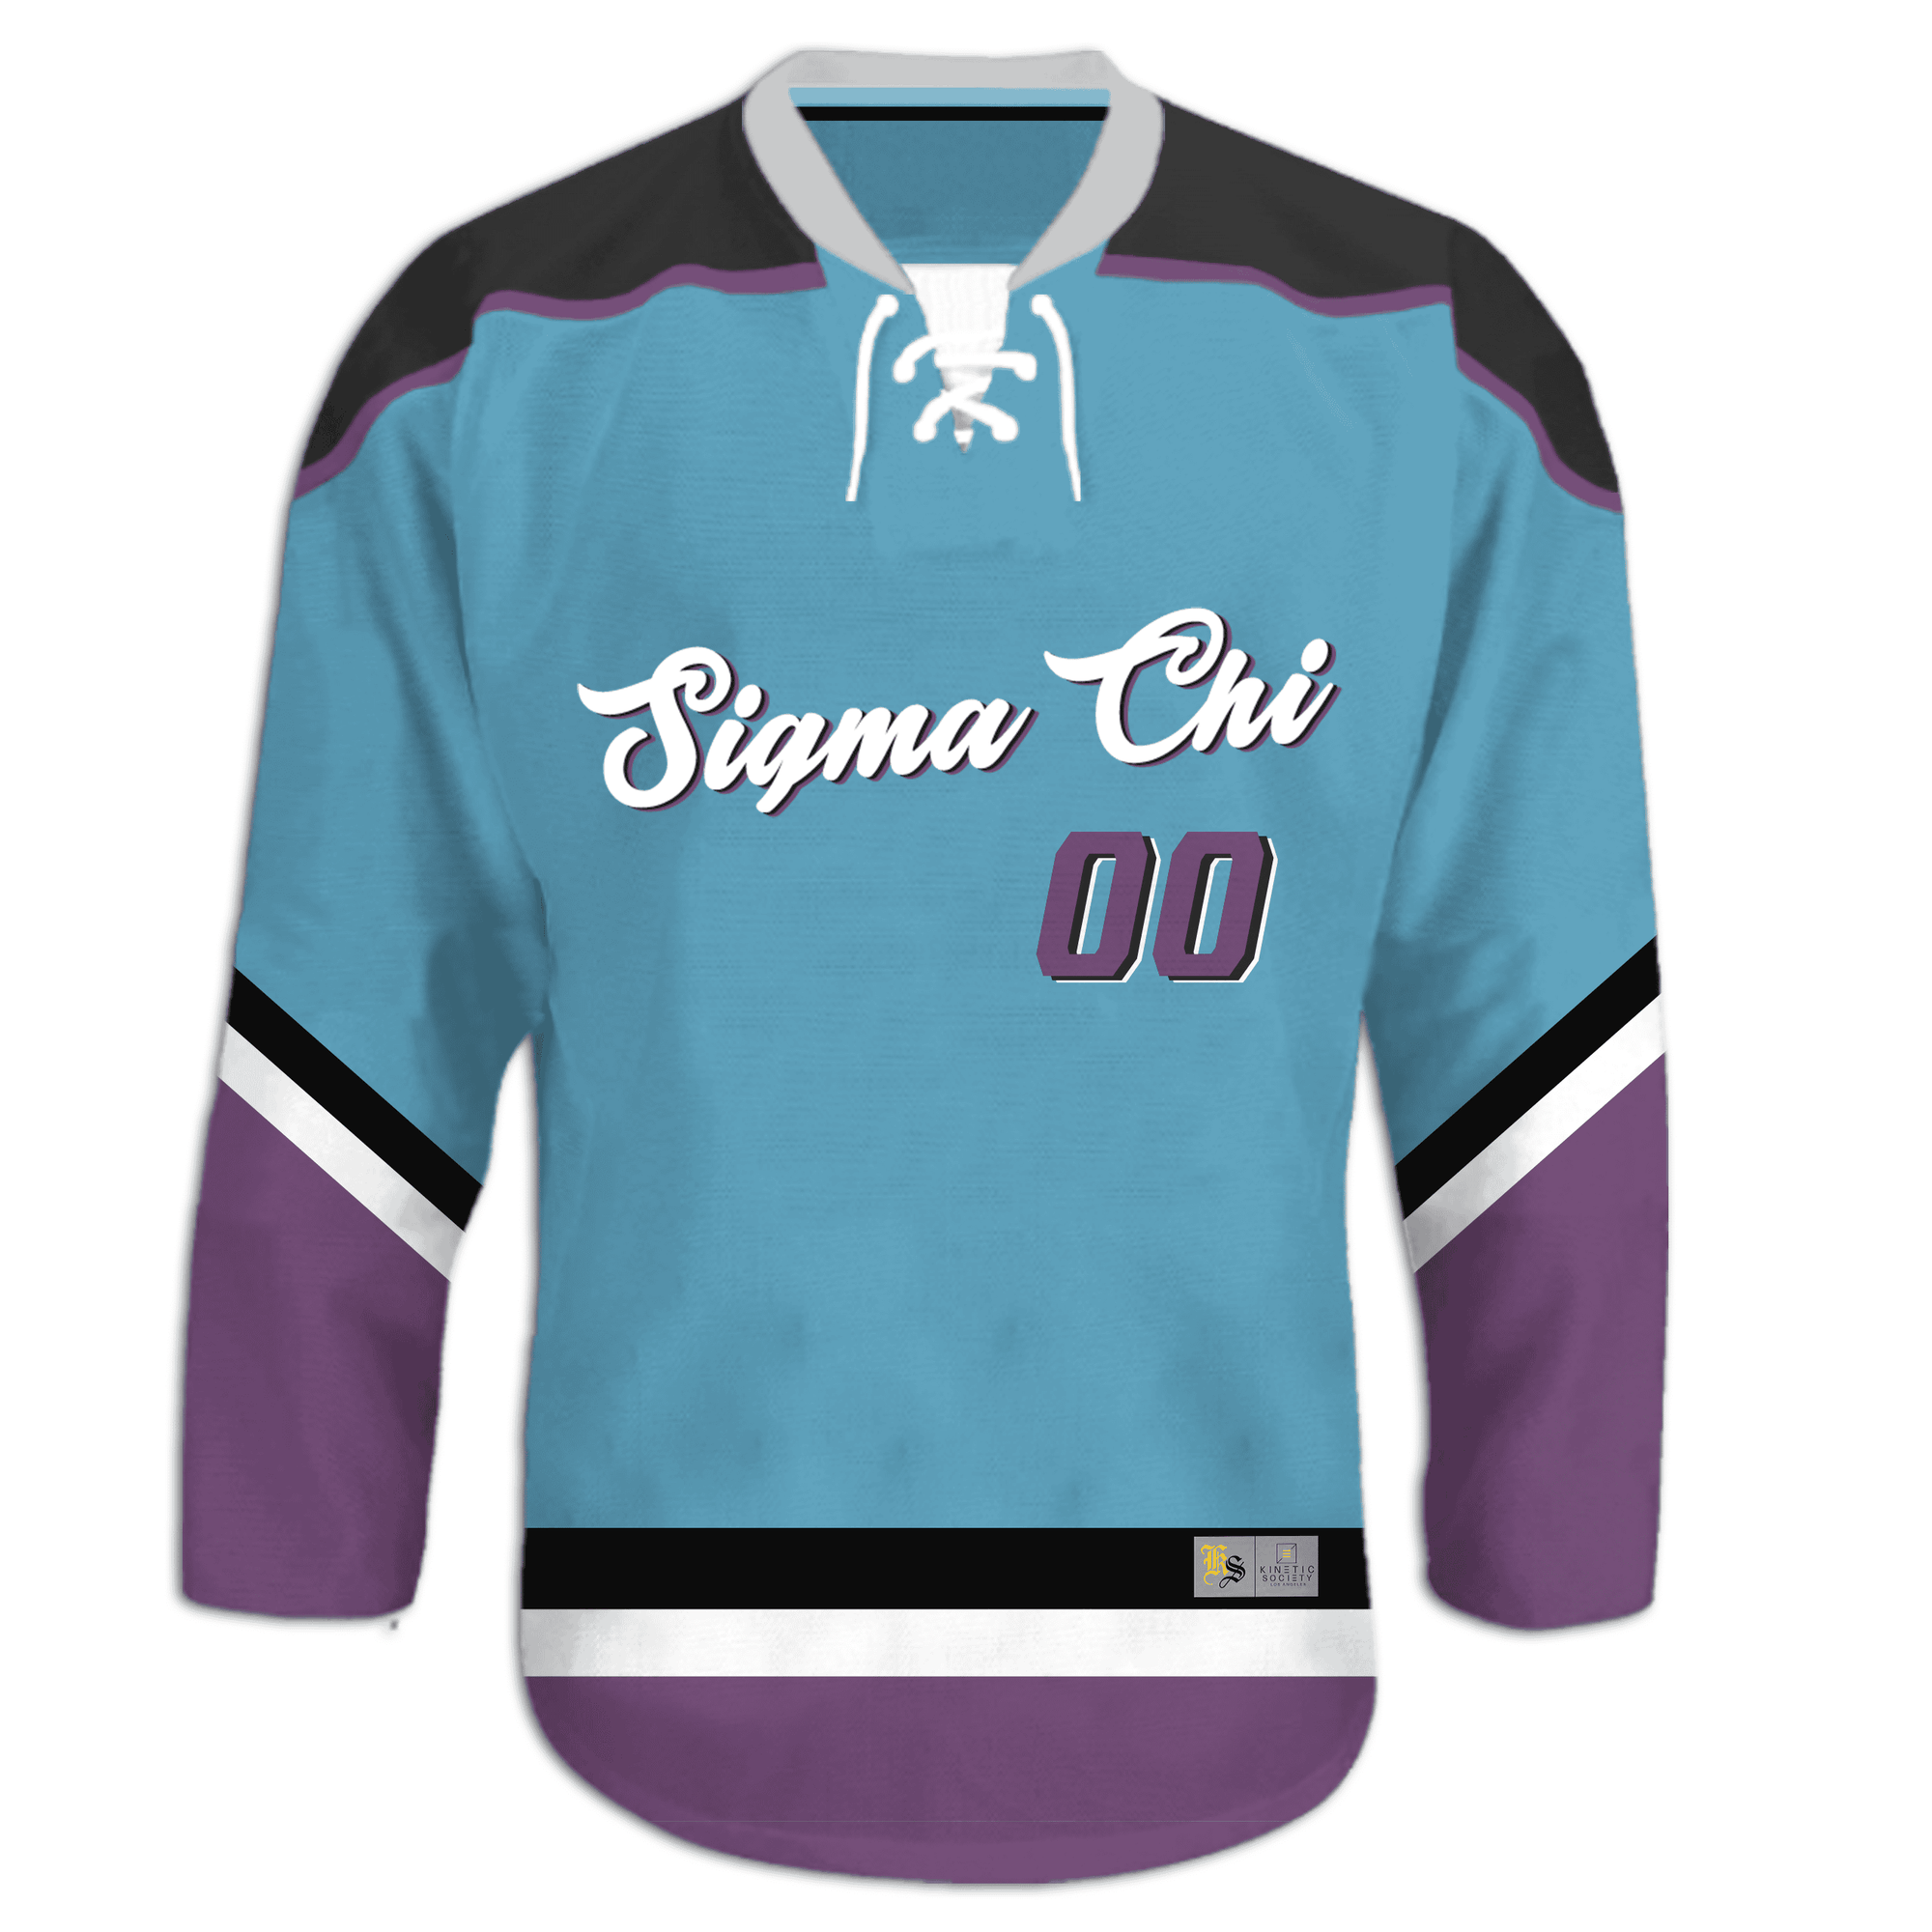 Sigma Chi - Kratos Hockey Jersey